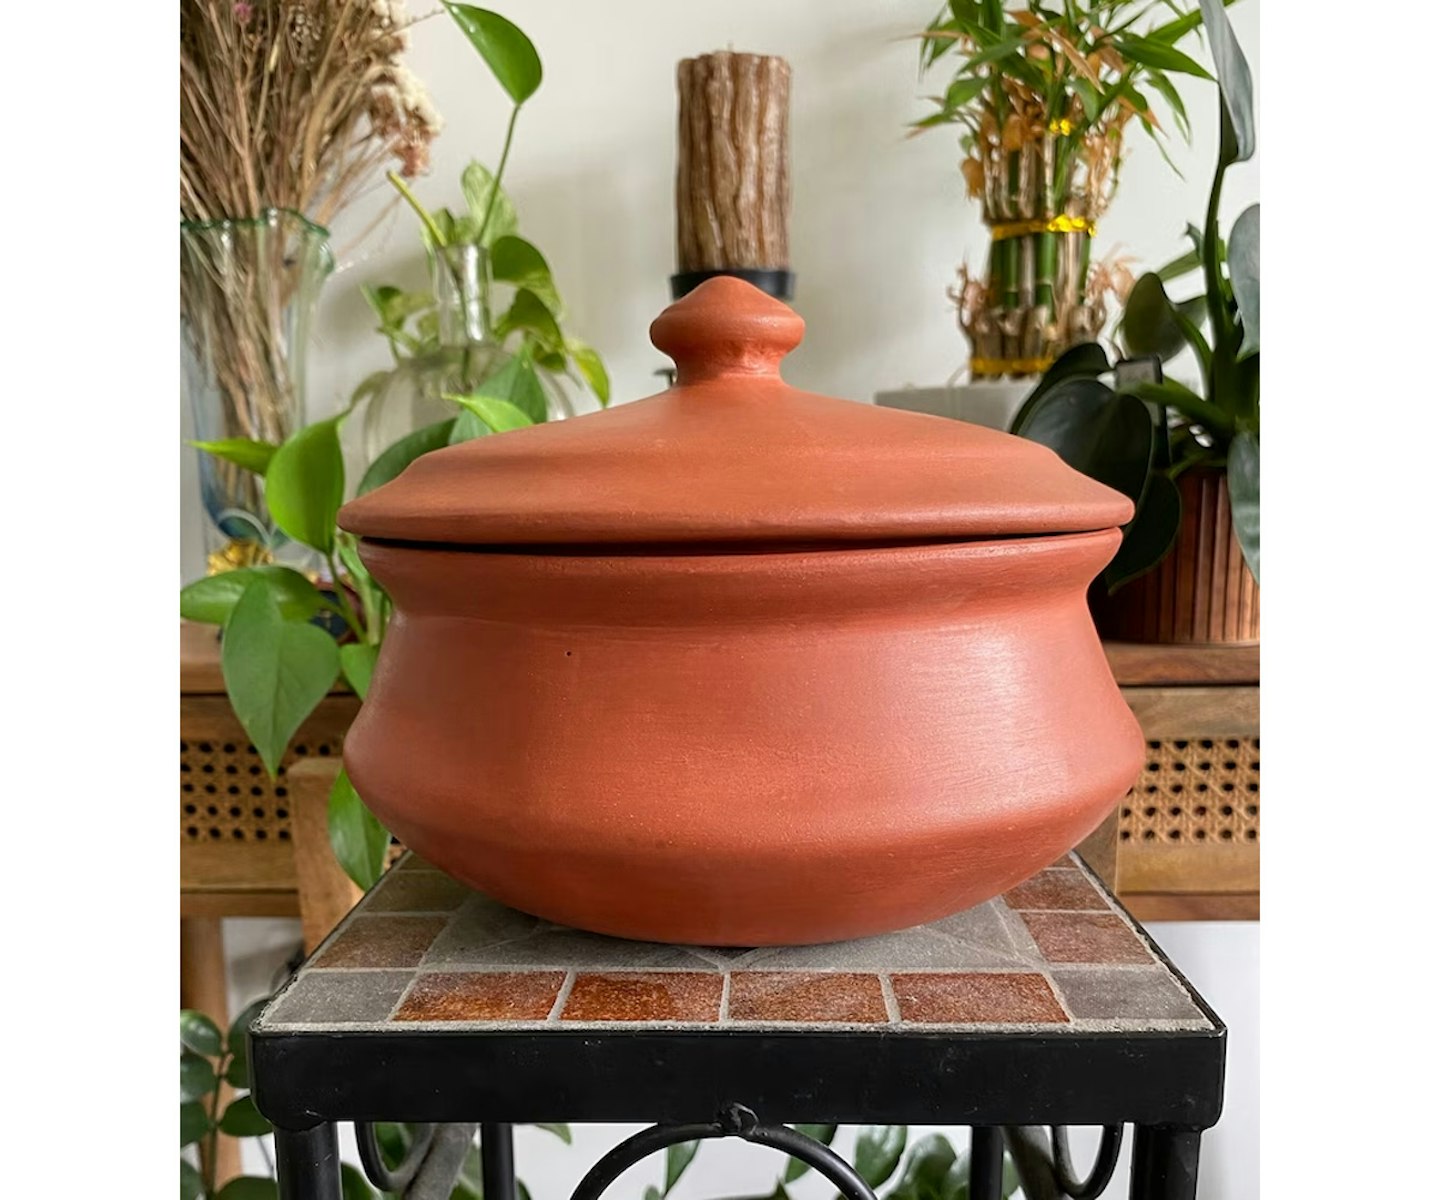 https://images.bauerhosting.com/affiliates/sites/10/2023/10/Terracotta-Cooking-Pot.jpg?auto=format&w=1440&q=80